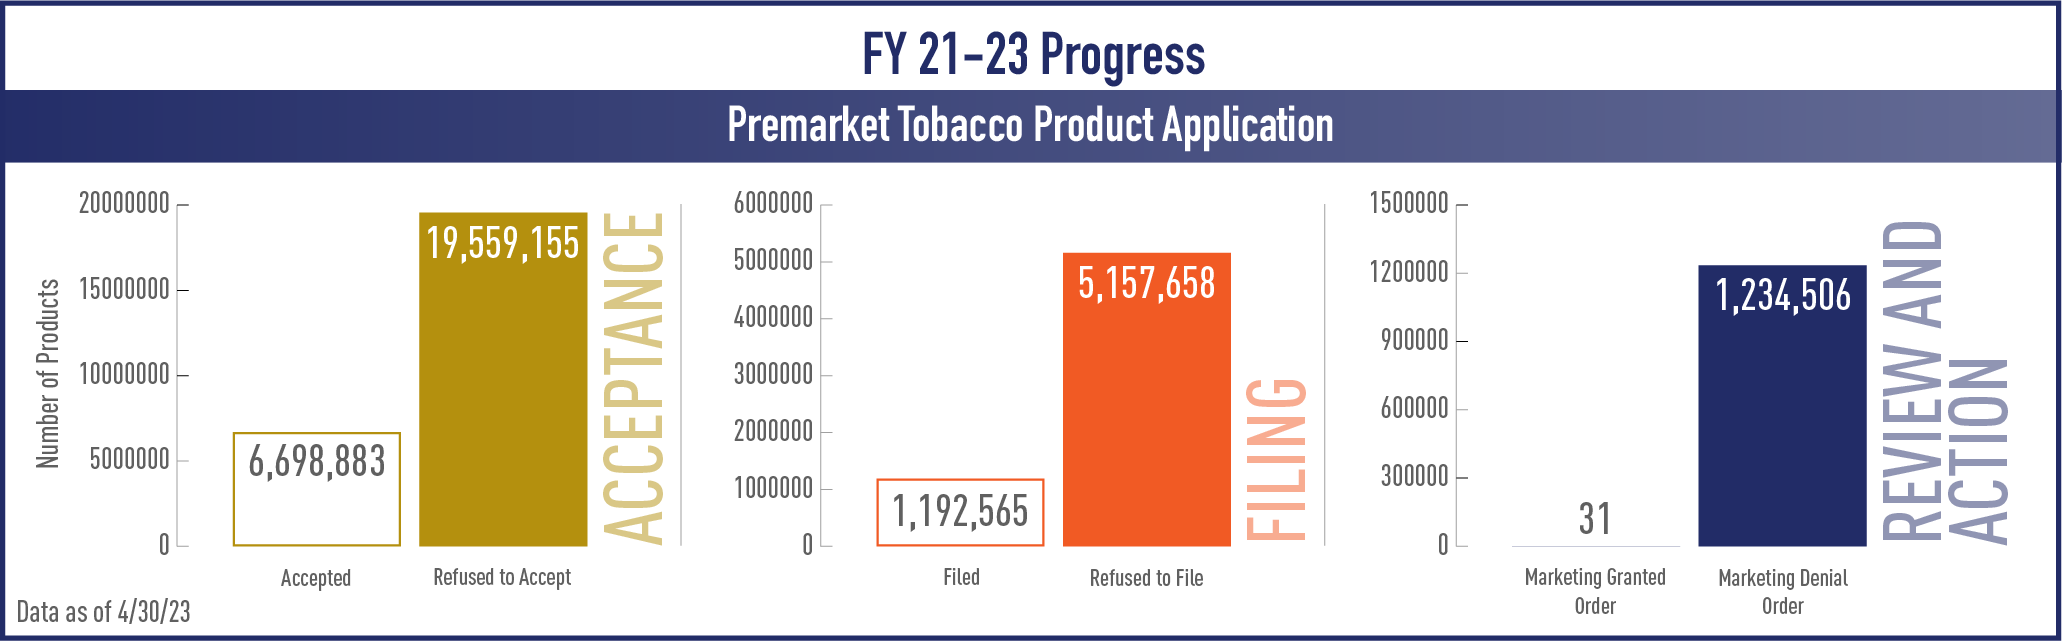 FY21-23 Progress of Premarket Tobacco Product Applications